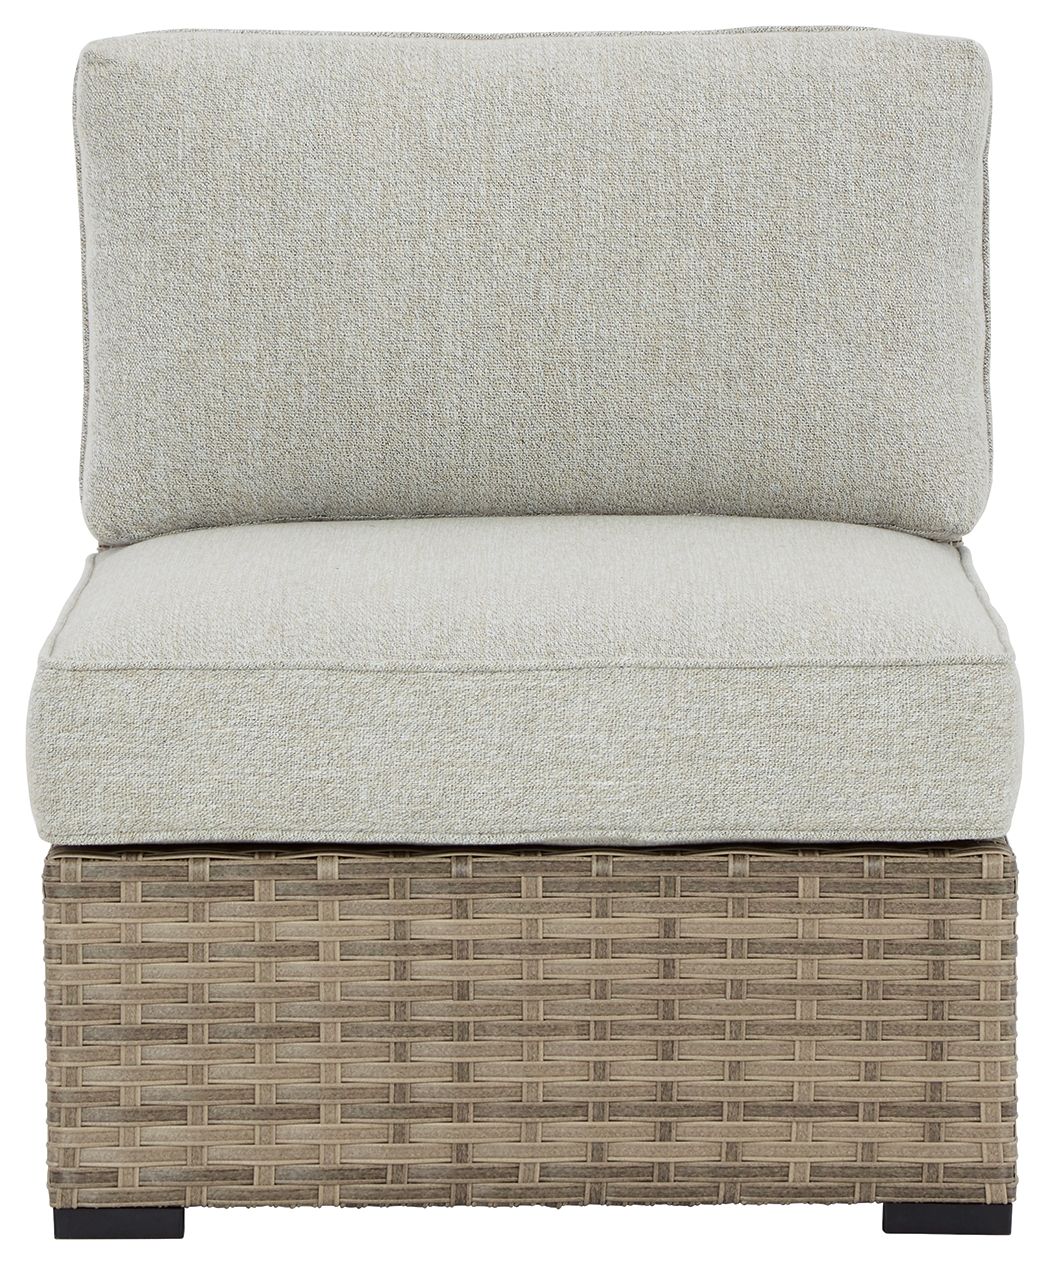 Calworth - Beige - Armless Chair W/Cushion (Set of 2) - Tony's Home Furnishings